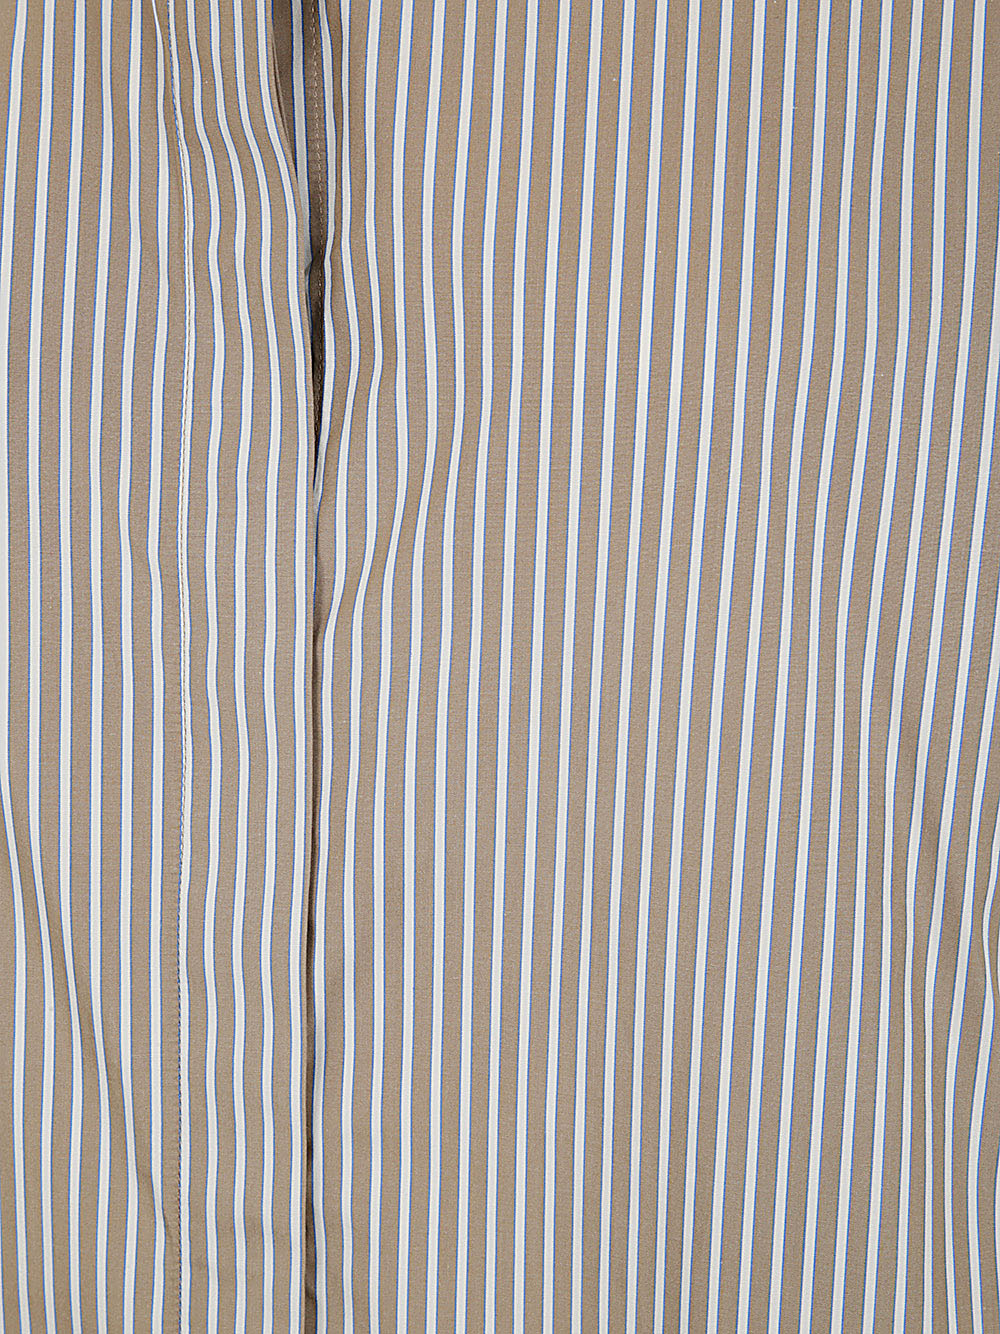 Rondine Striped Shirt